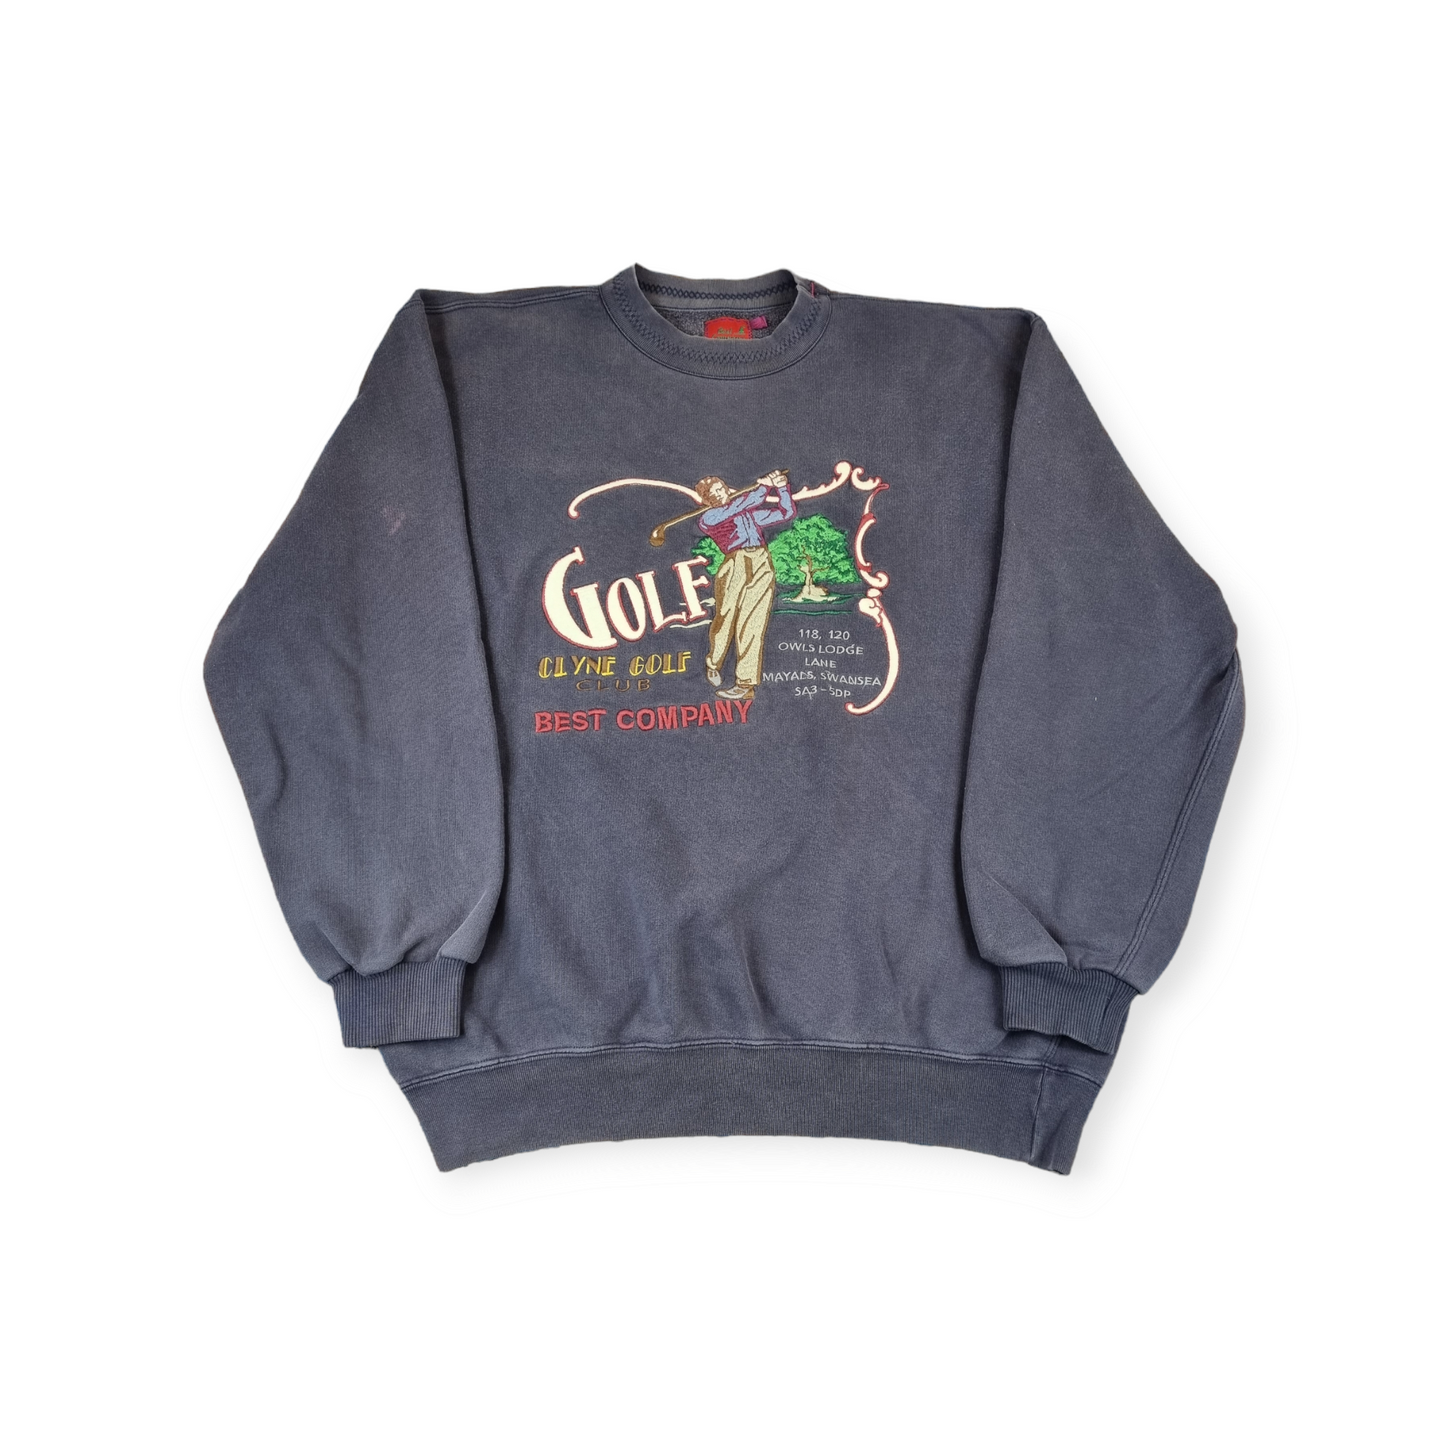 Vintage Best Company Golf Sweatshirt (XL)